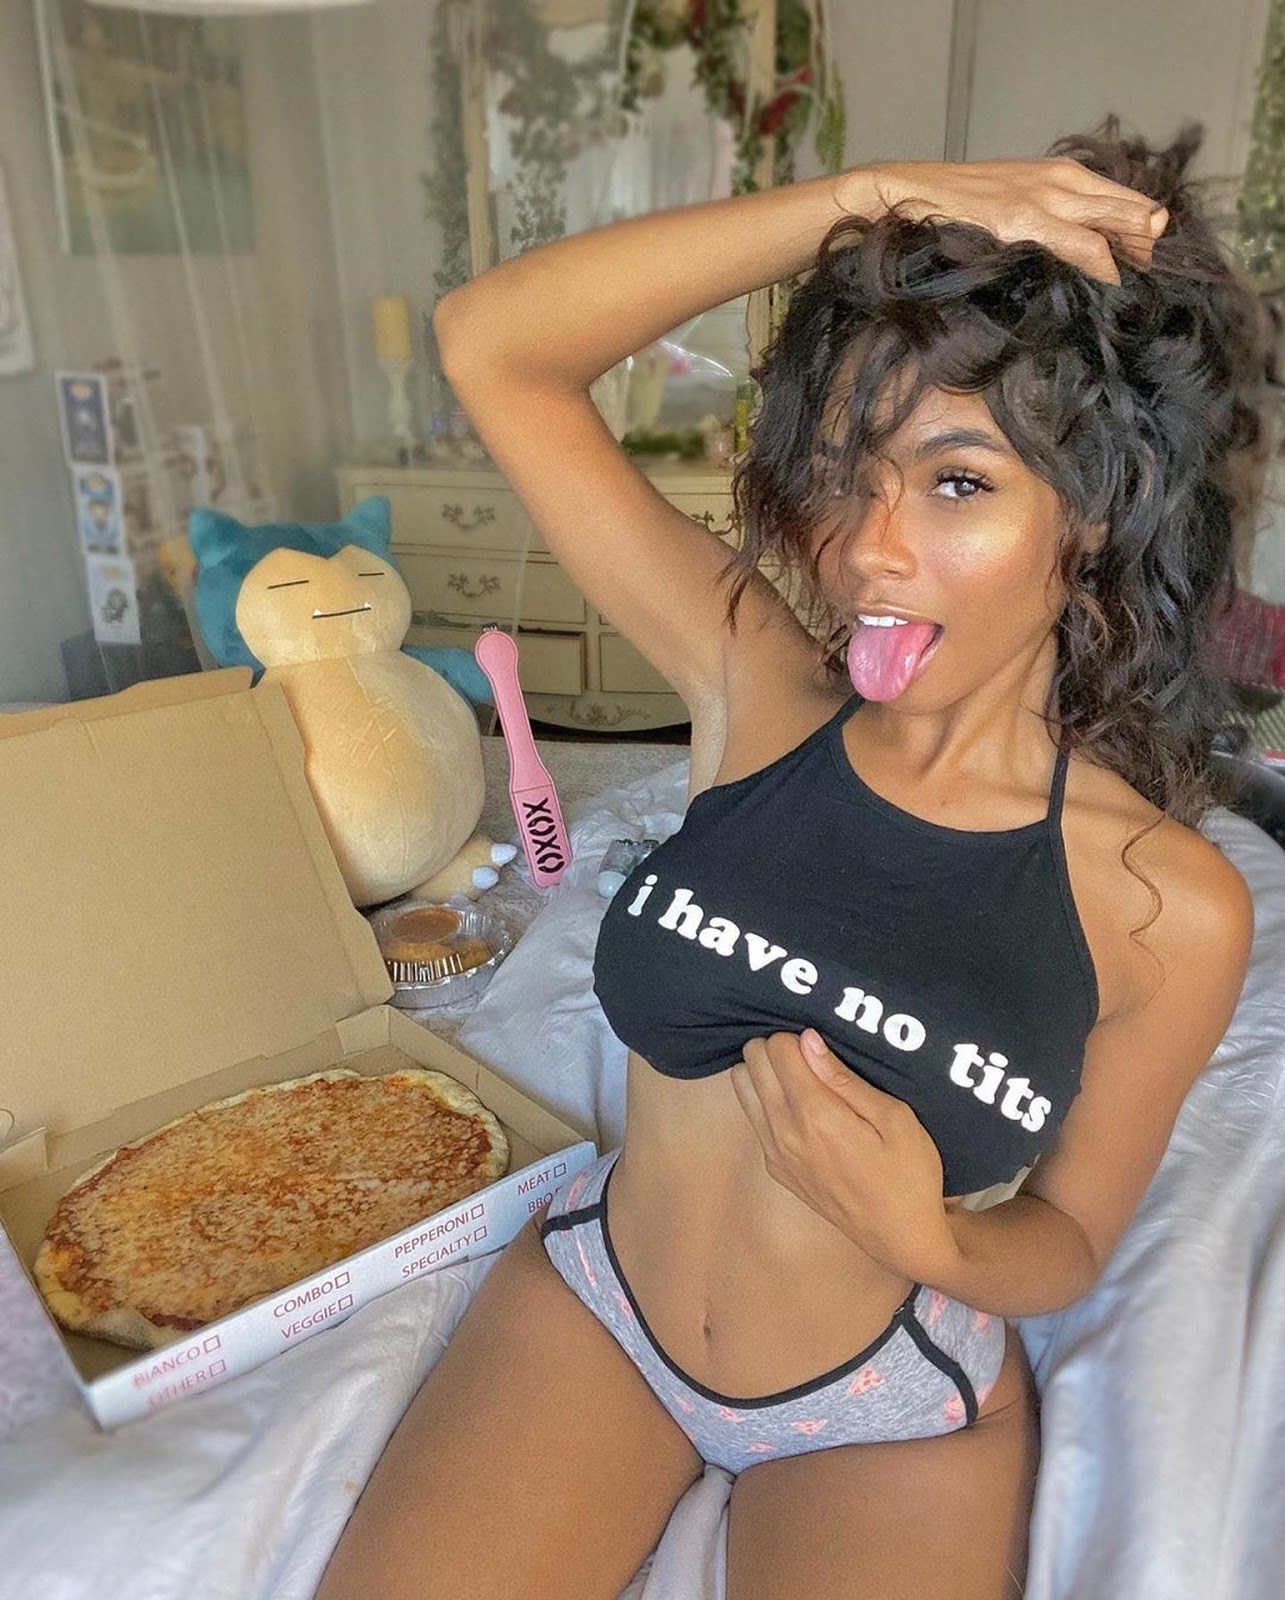 Model Helayna Marie’s Instagram Feed Does a Body Good (NSFW)